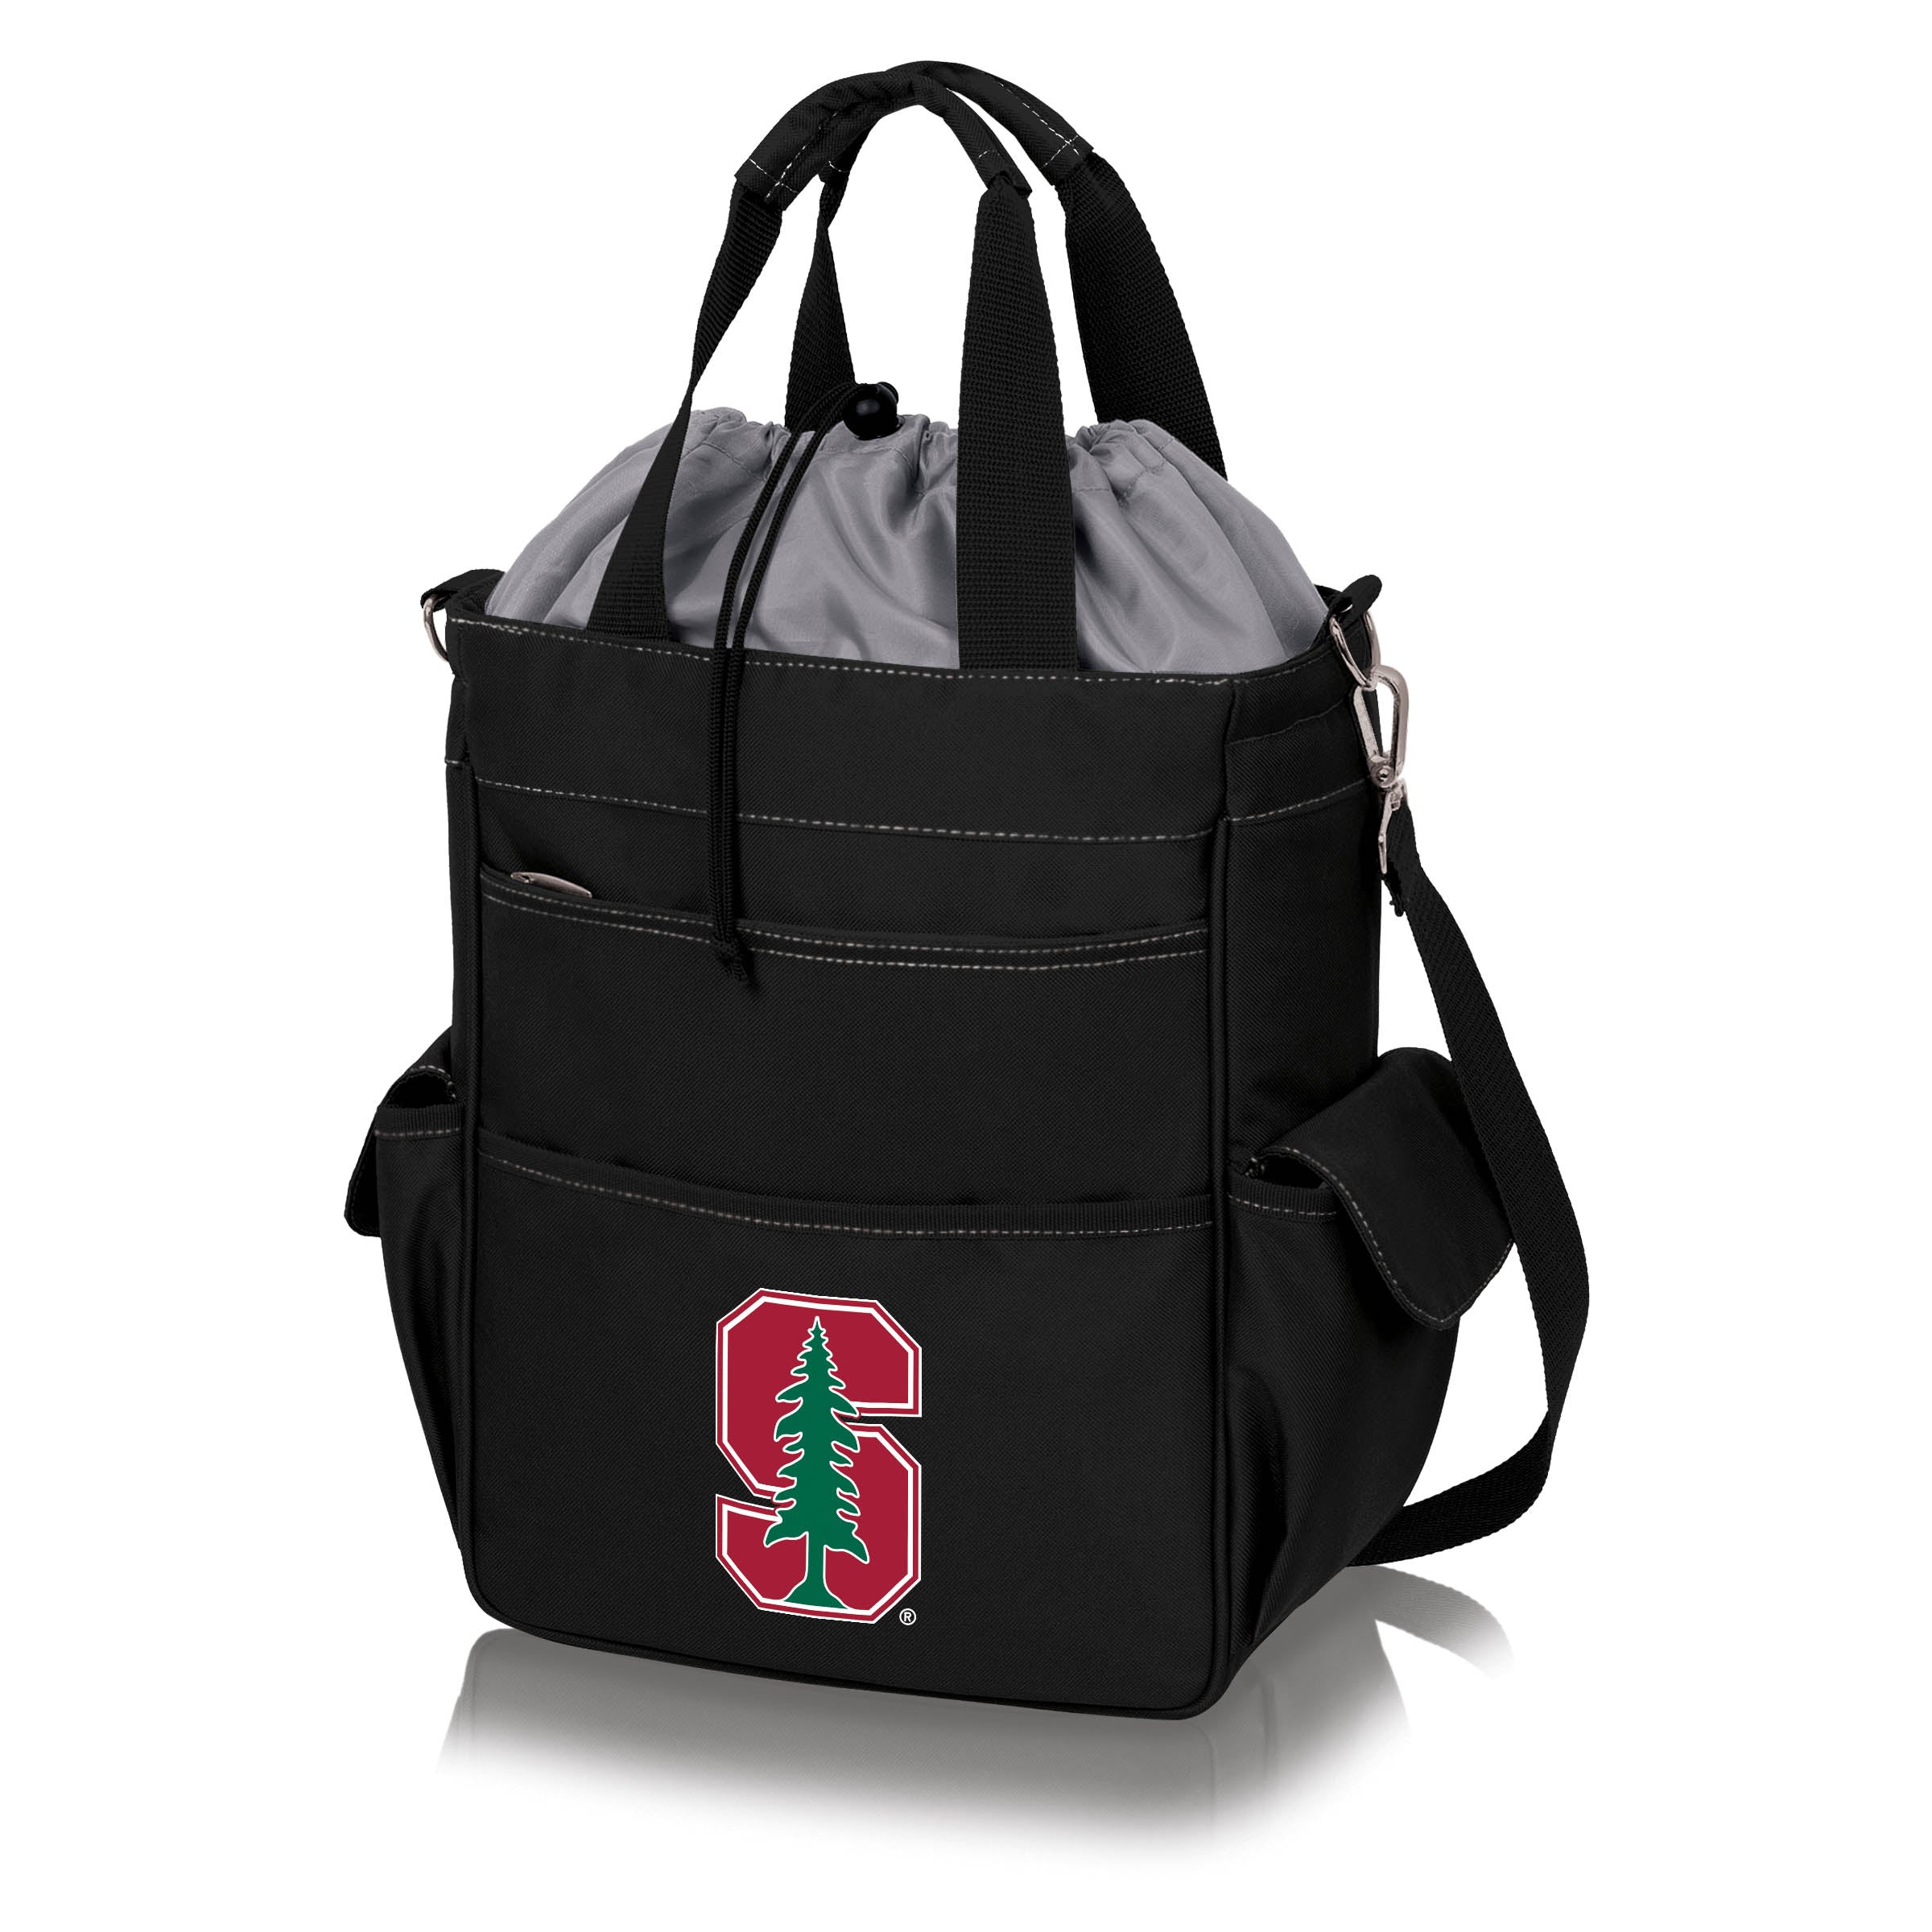 Stanford Cardinal - Activo Cooler Tote Bag